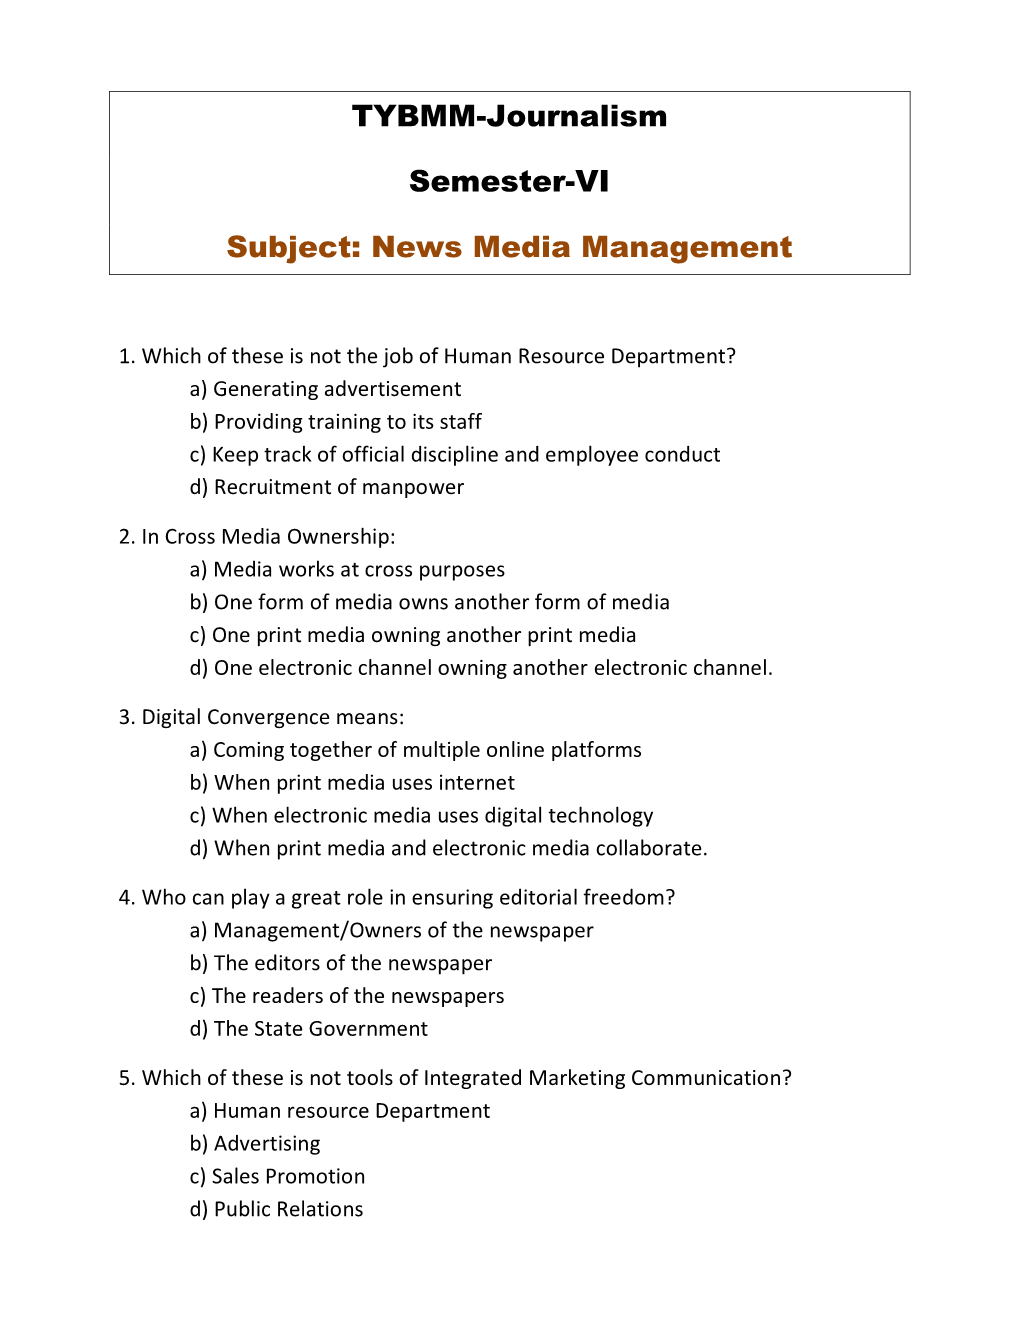 TYBMM-Journalism Semester-VI Subject: News Media Management